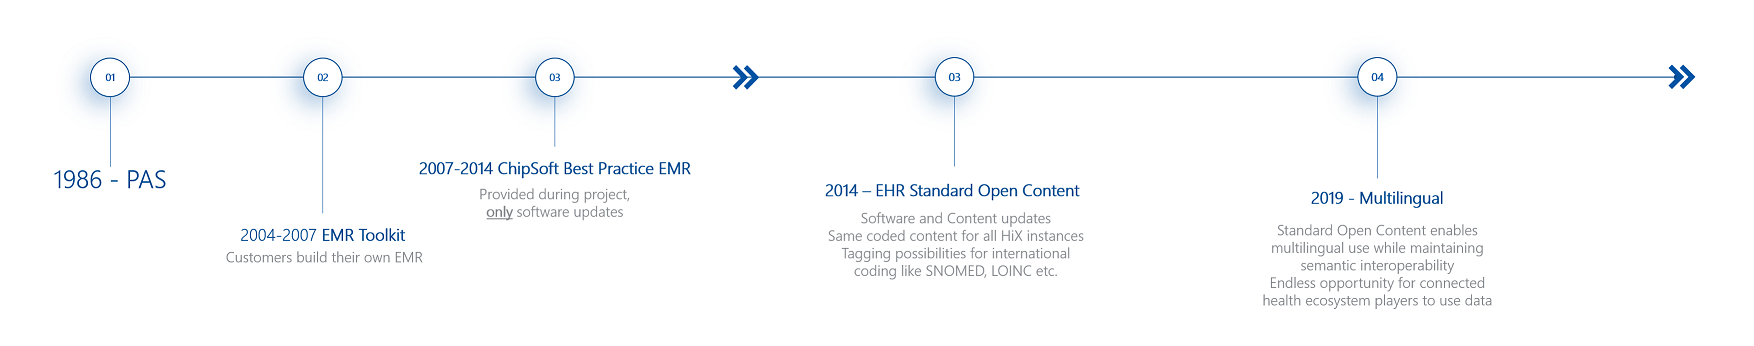 The evolution of HiX' Standard Open Content